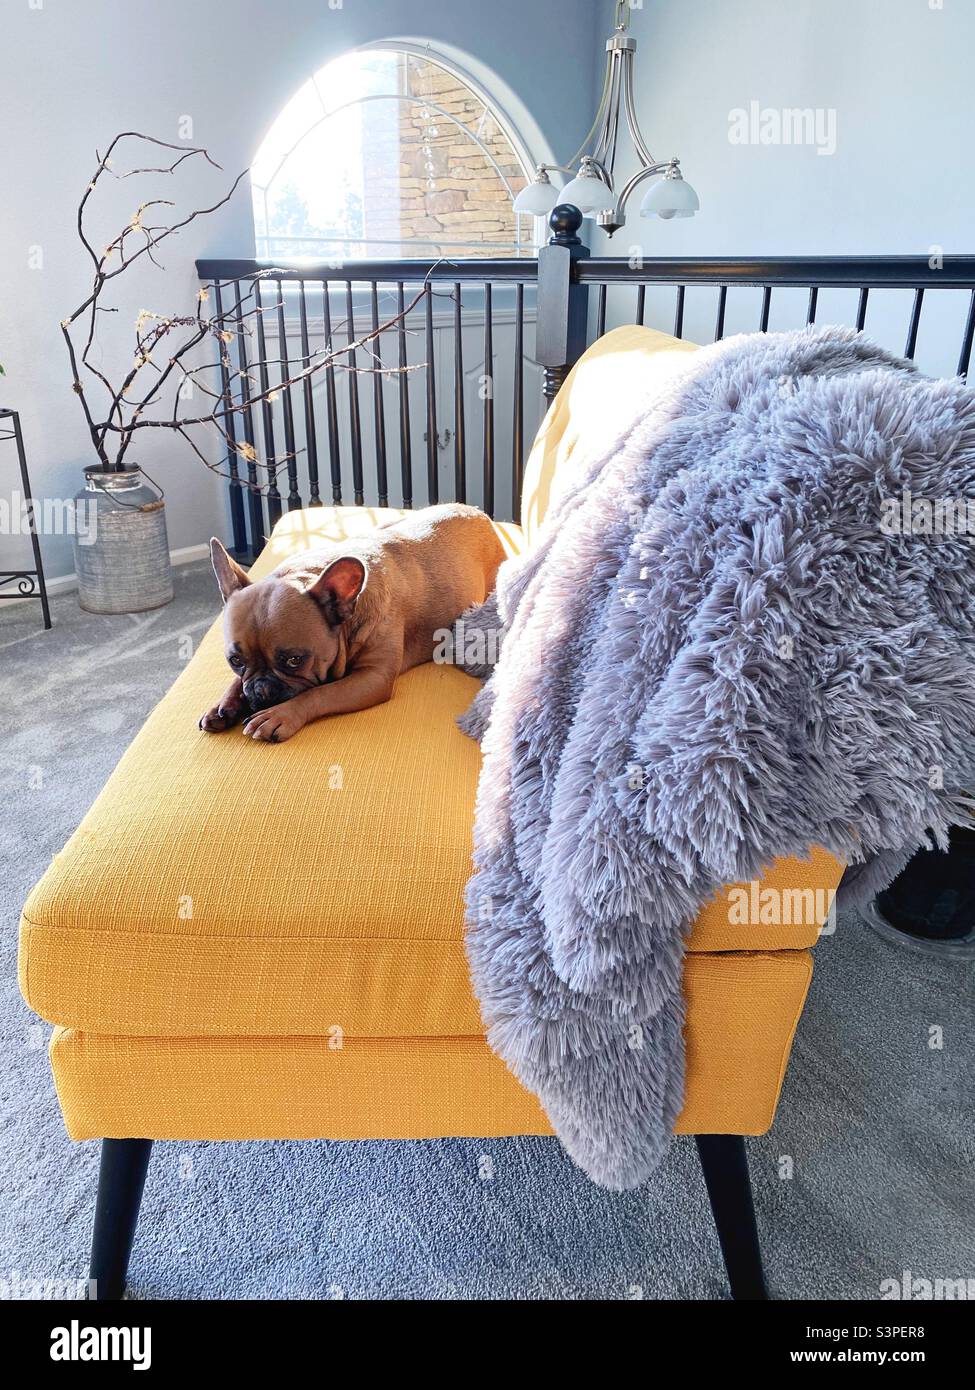 French bulldog on a yellow sofa. Stock Photo